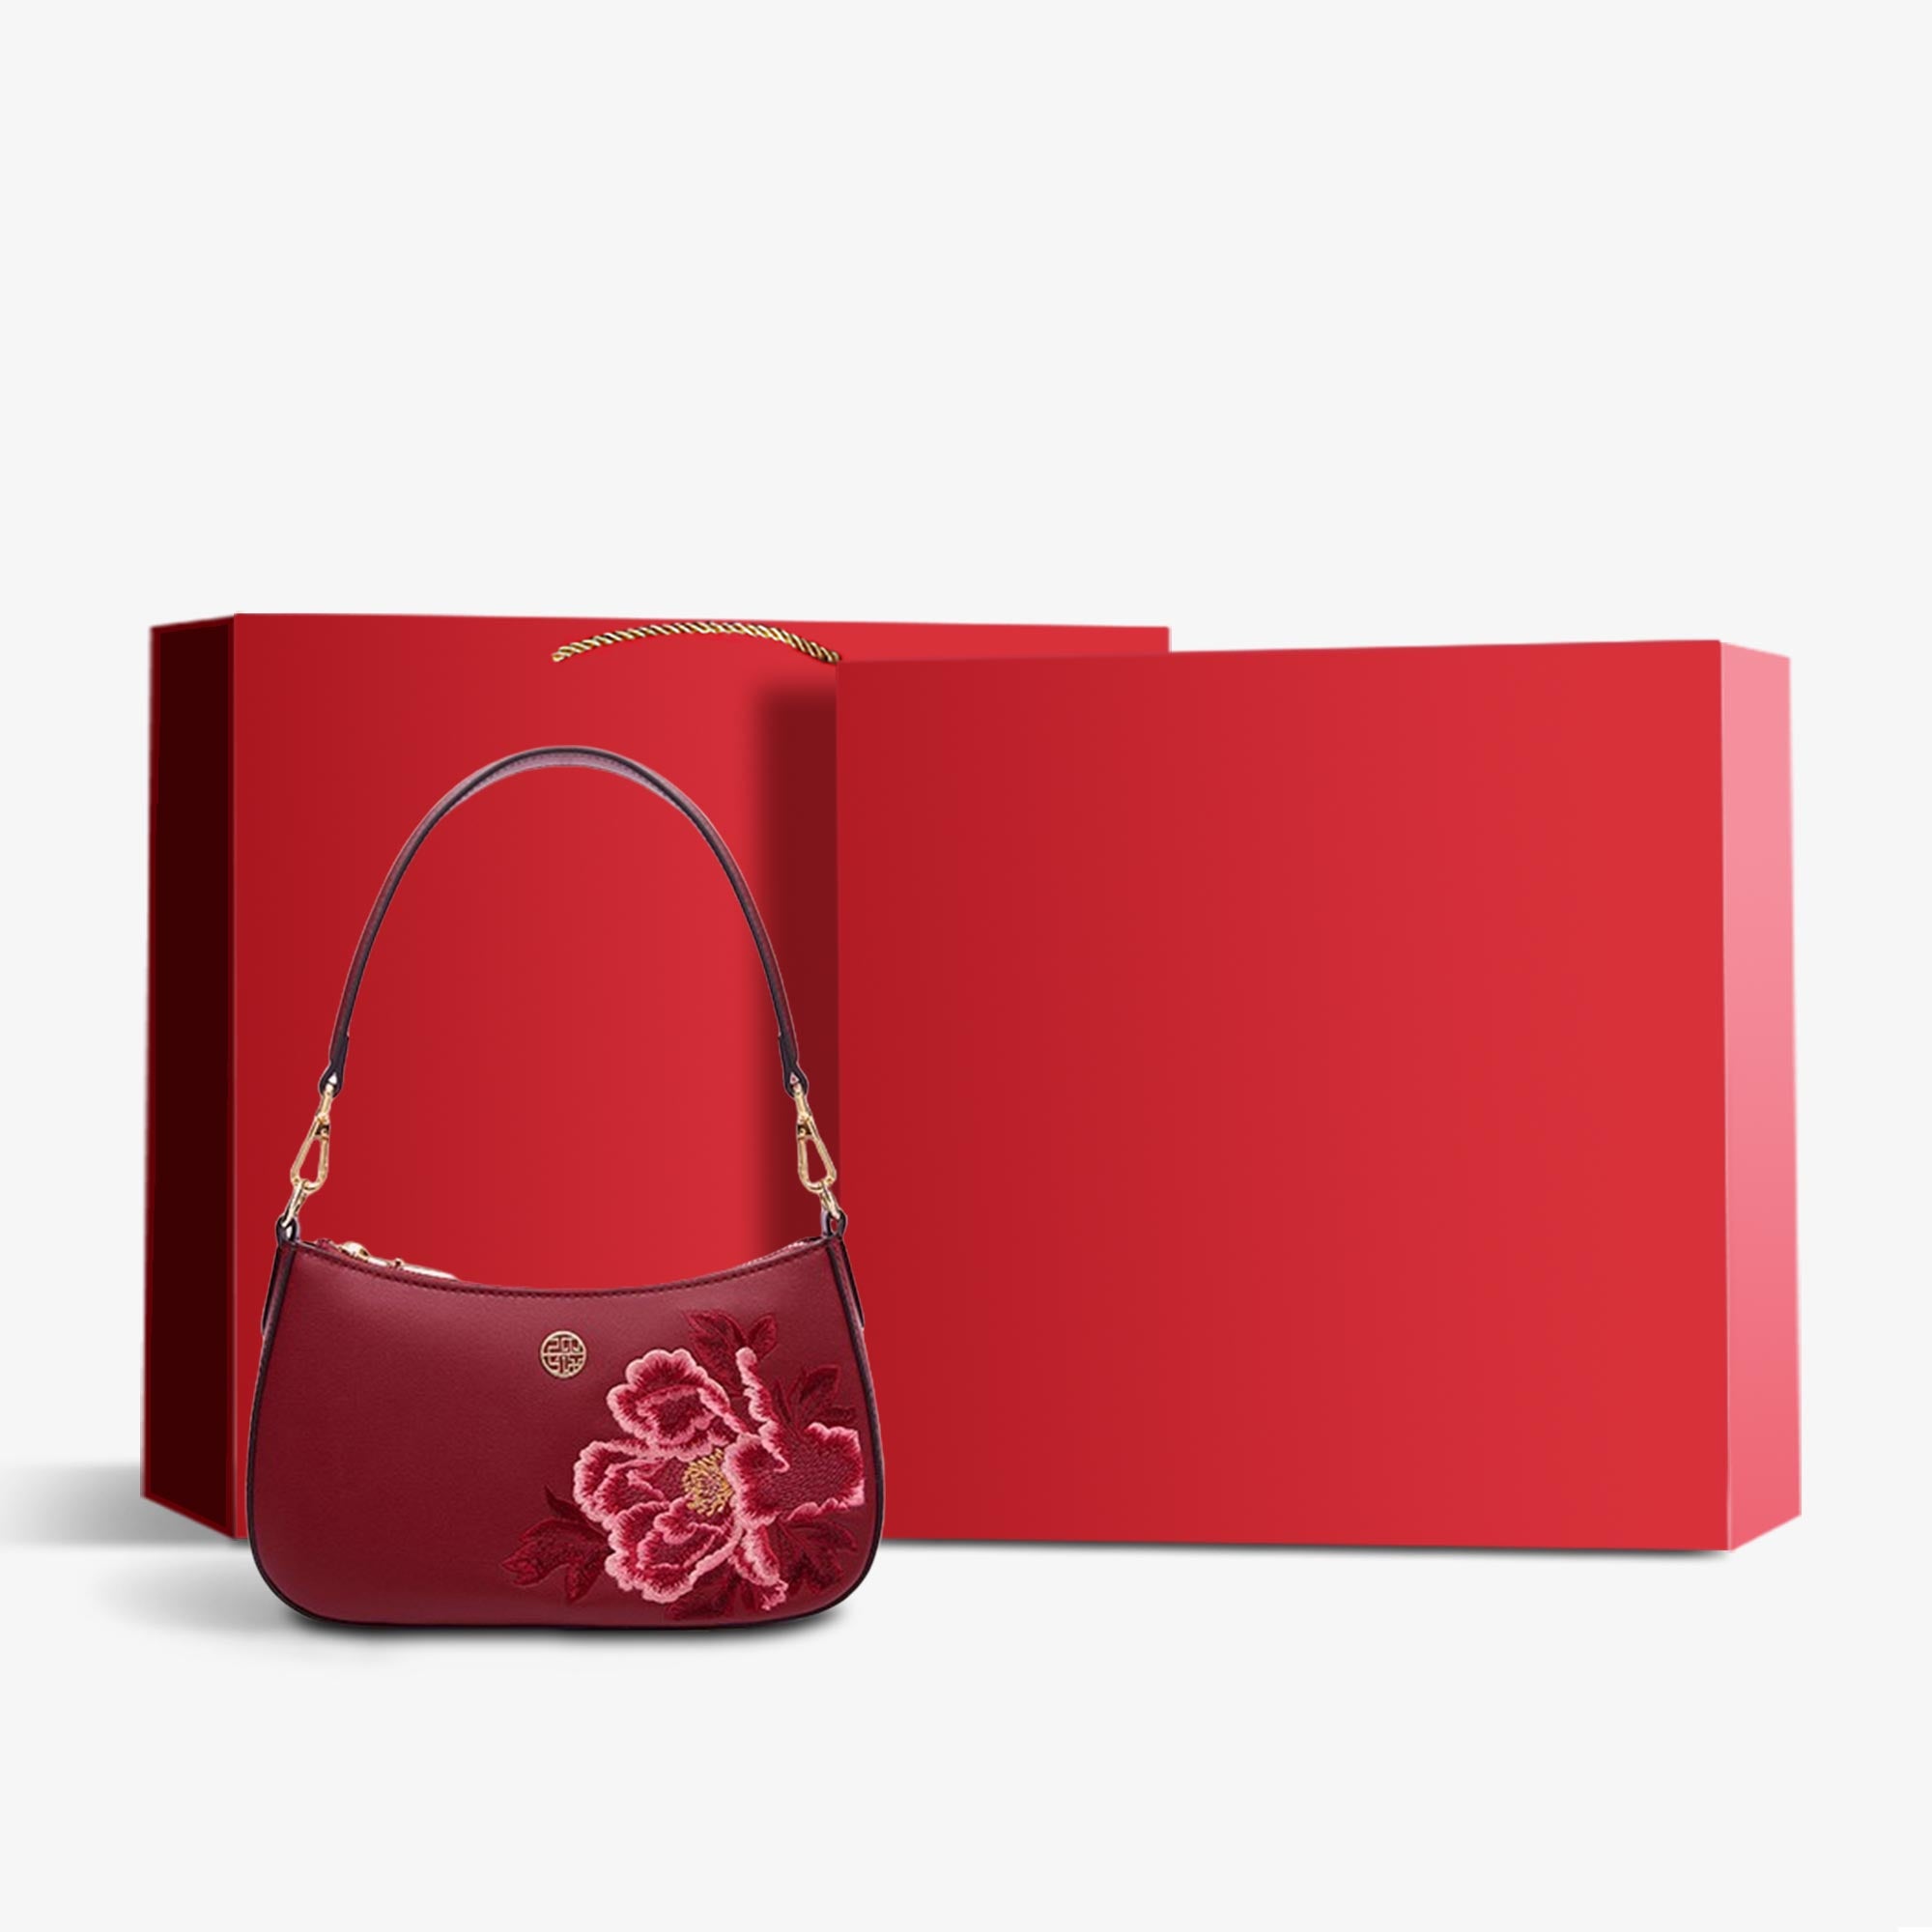 Embroidery Leather Peony Women's Shoulder Handbag-Shoulder Bag-SinoCultural-Red-Bag with Gift Box-P220212-1-g-SinoCultural